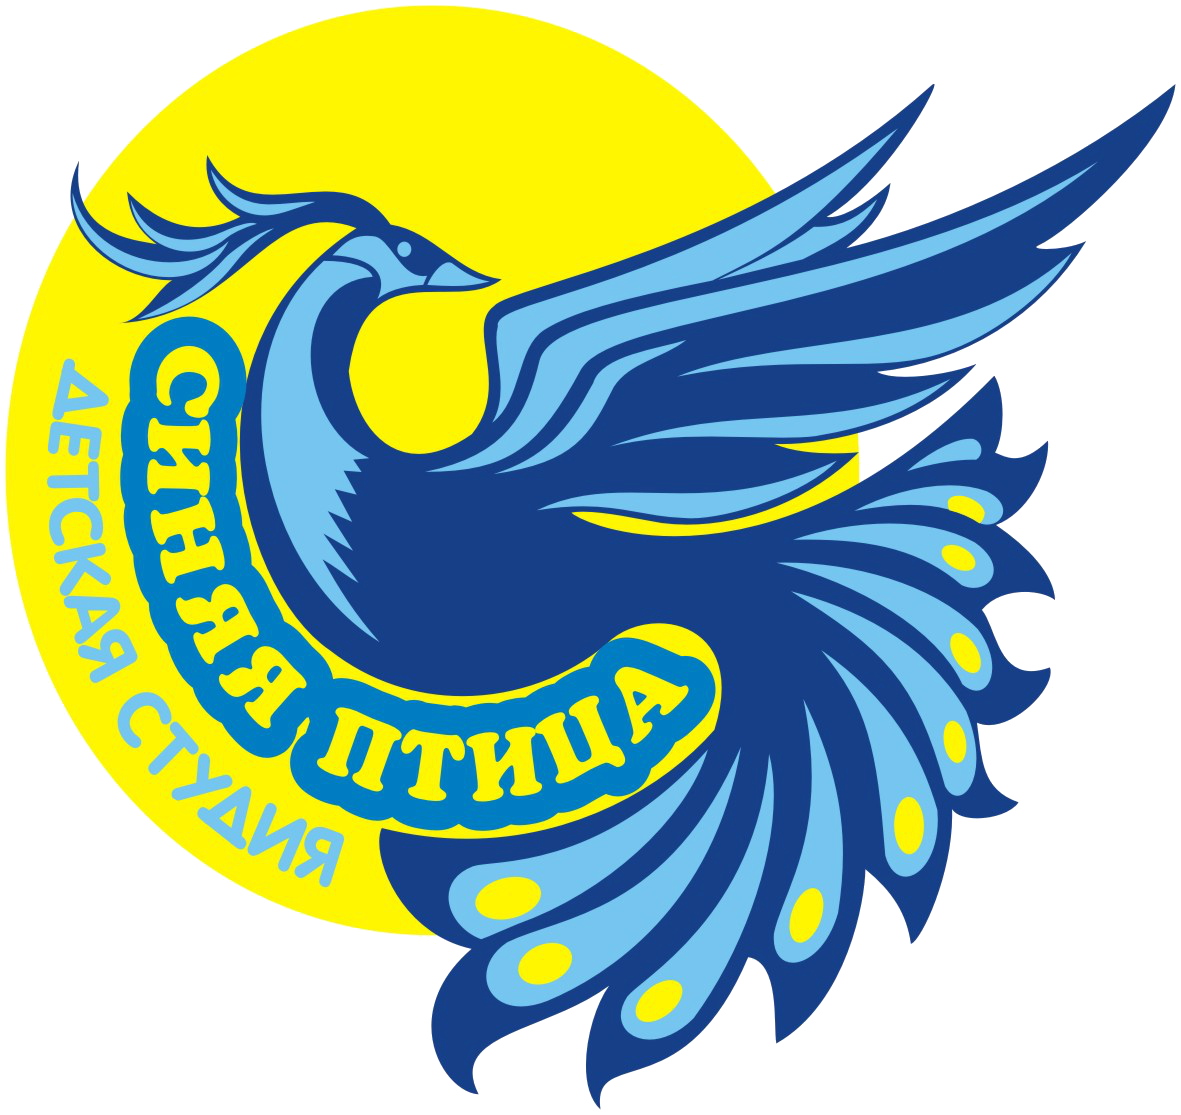 Птица символ счастья. Эмблема птицы. Синяя птица логотип. Эмблема птицы для детей. Синяя птица логотип конкурса.